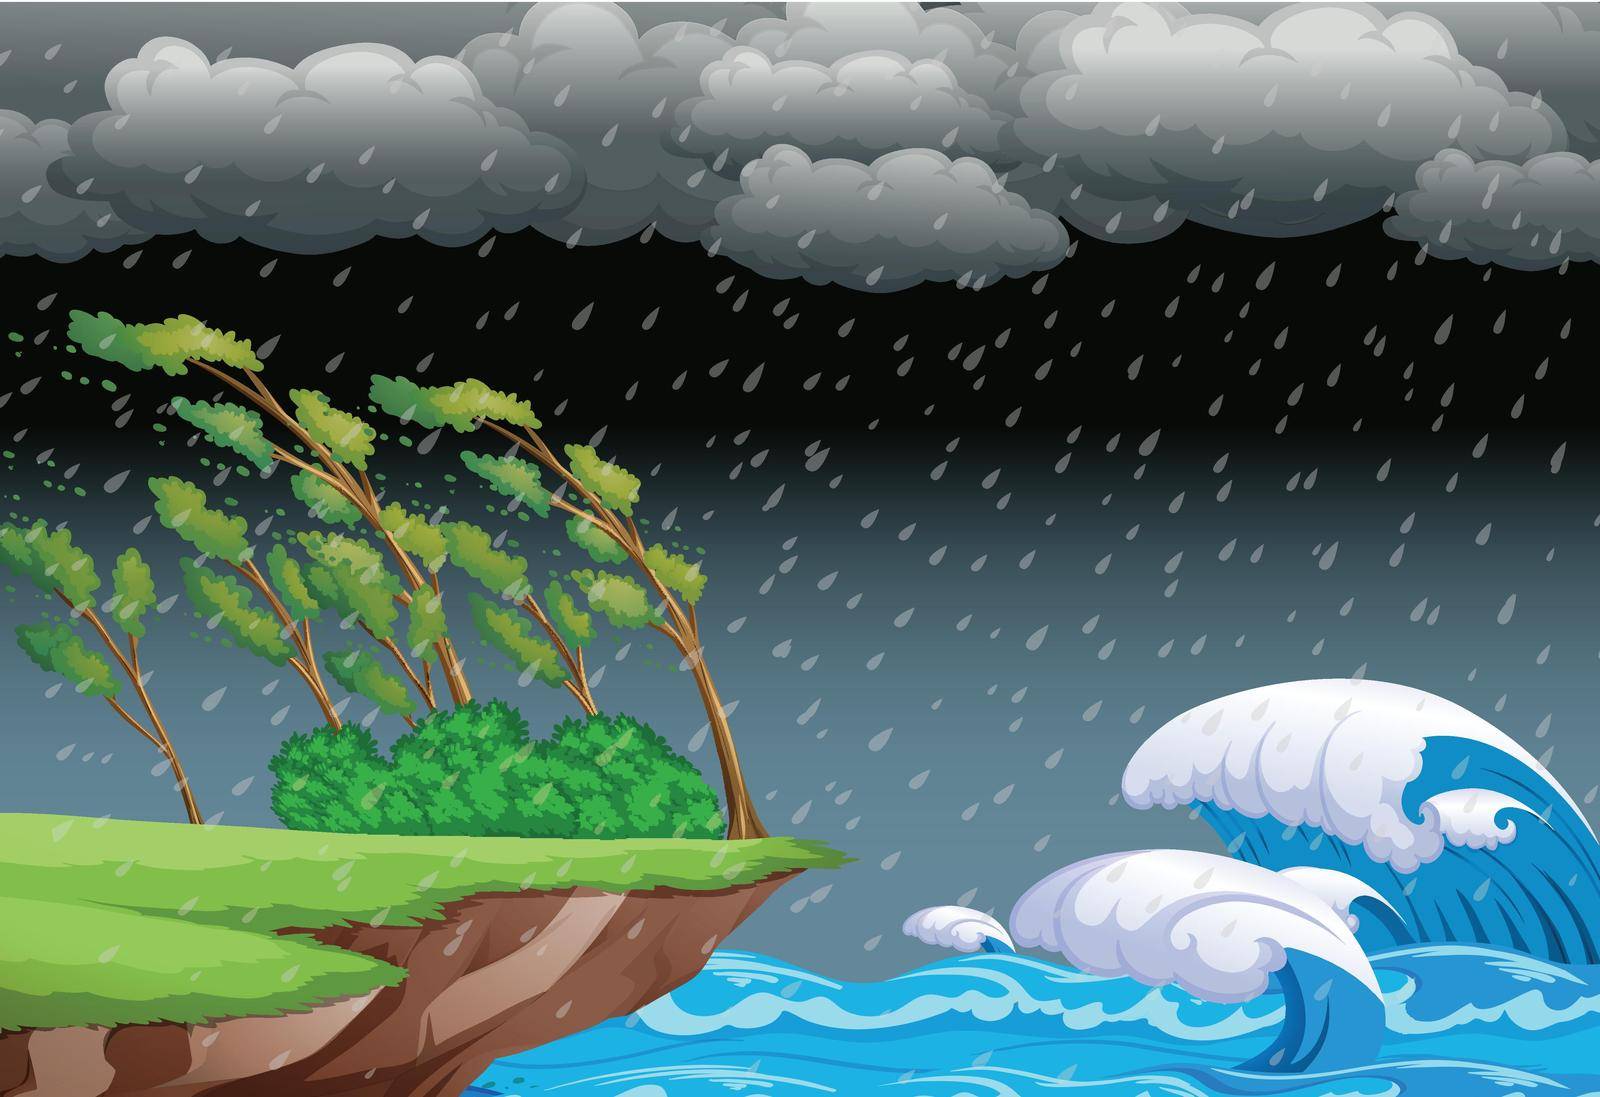 A stormy night background illustration